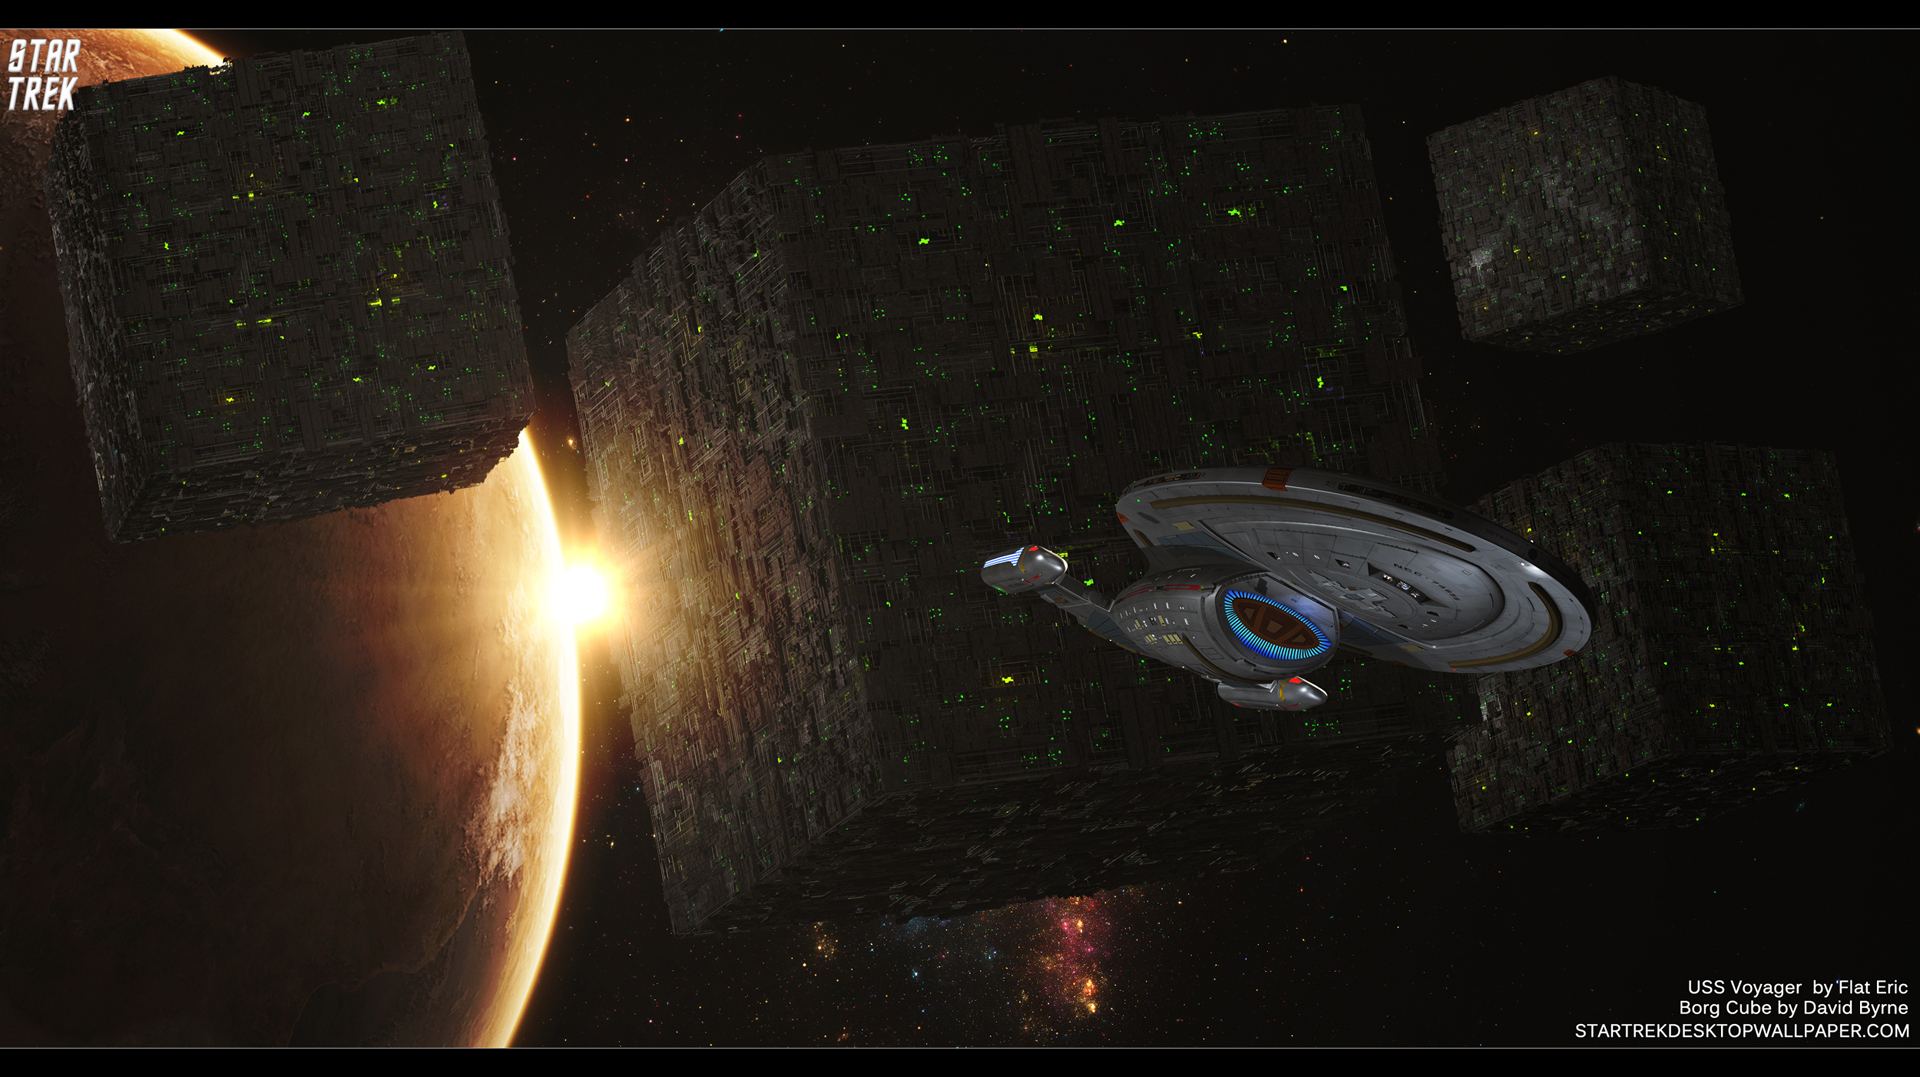 - Star Trek Borg Cube And USS Voyager - free Star Trek computer desktop wallpaper, pictures, images.